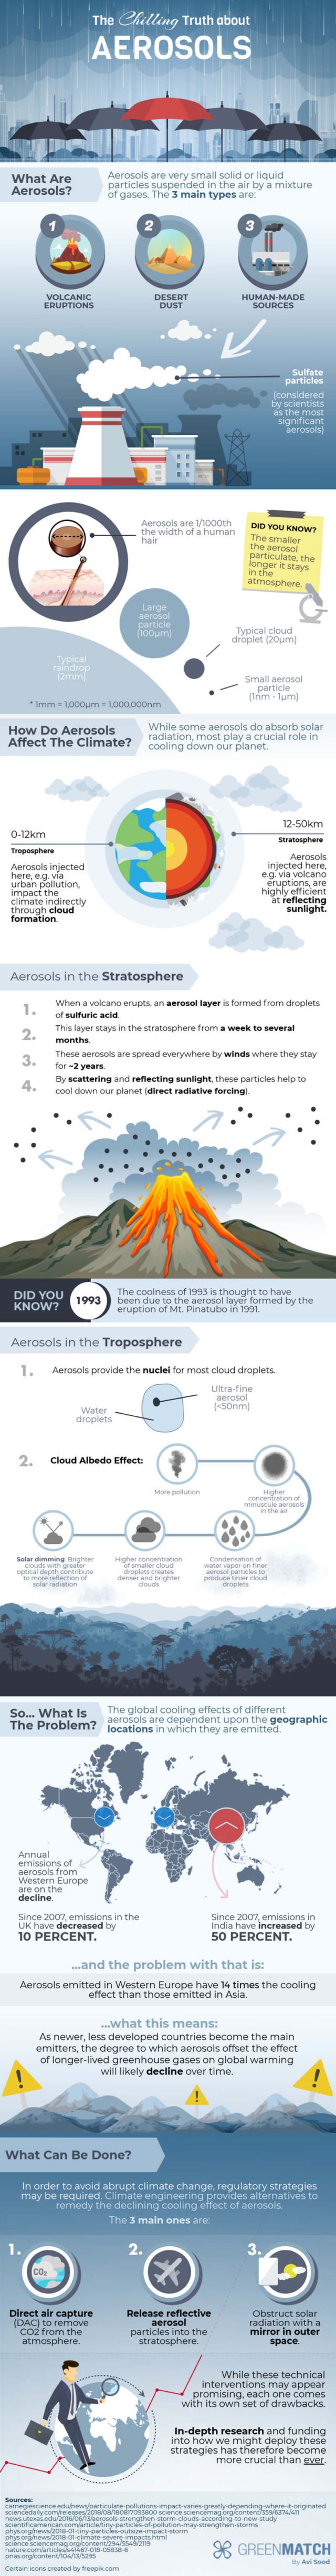 Aerosols vs Global Warming - infographic